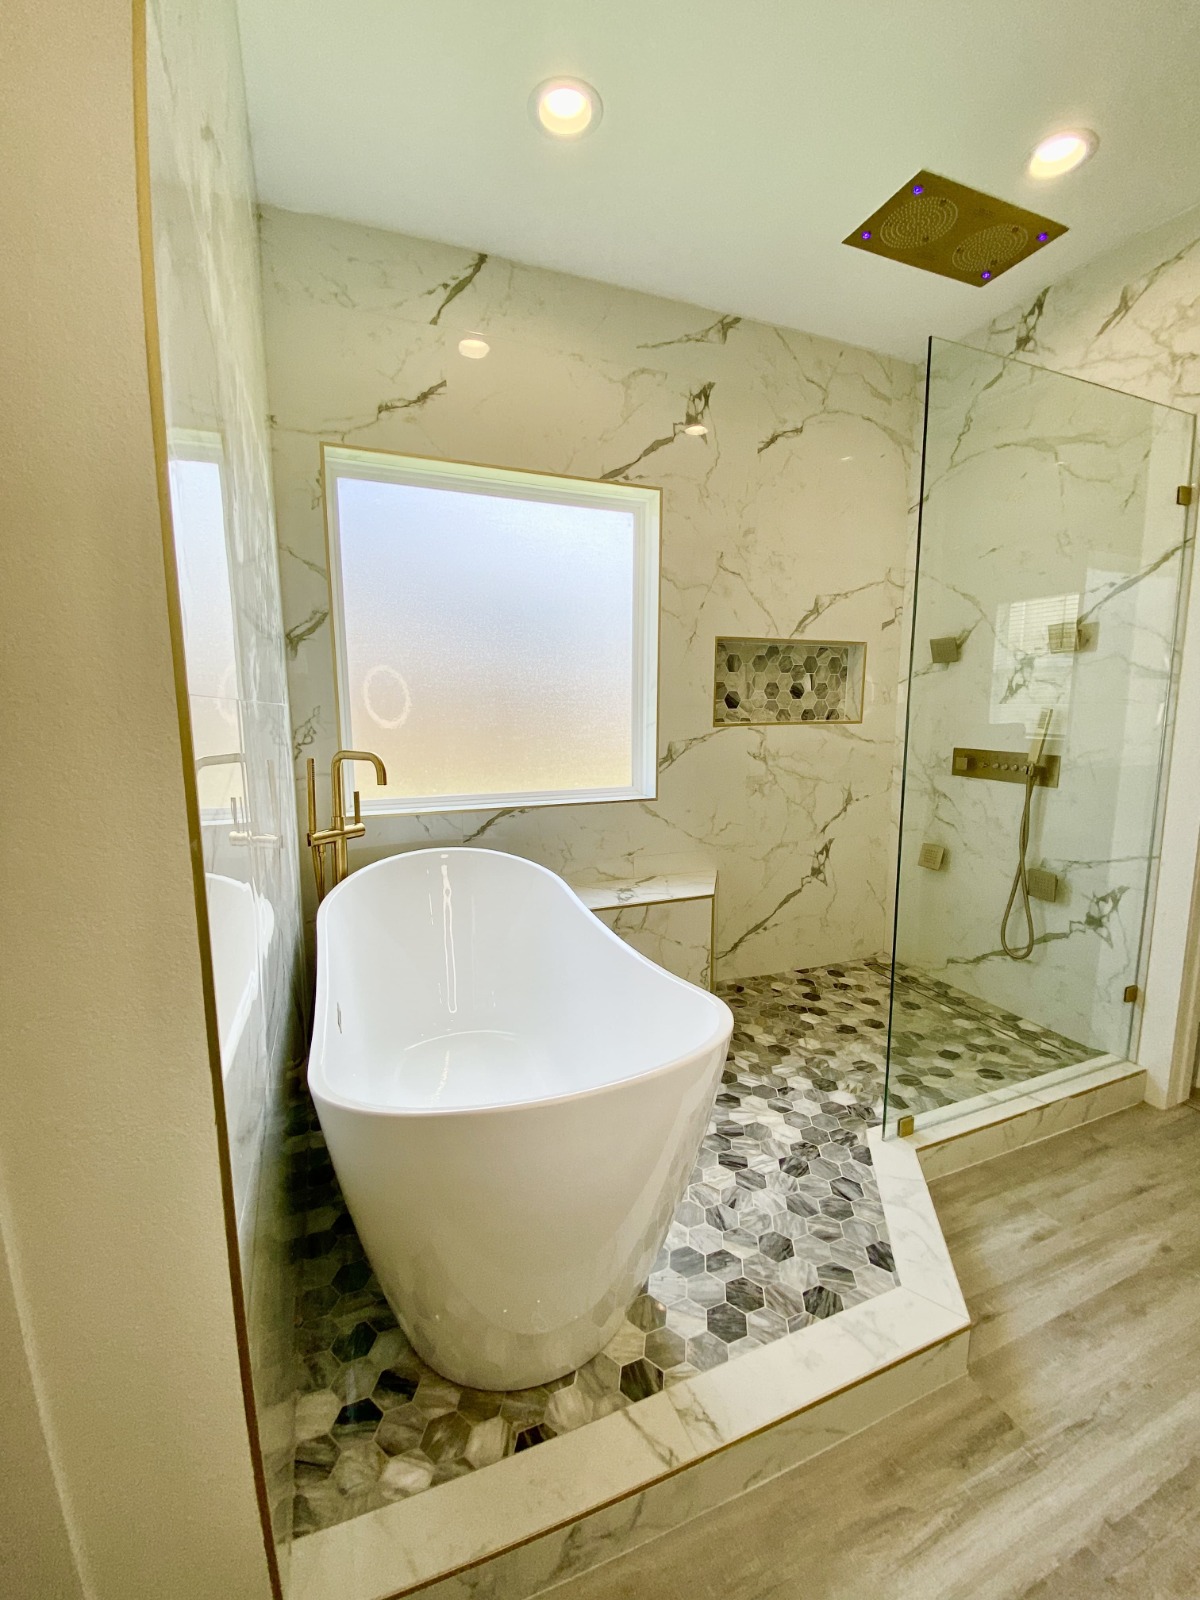 Viannis-Master-Bathroom-remodeling1